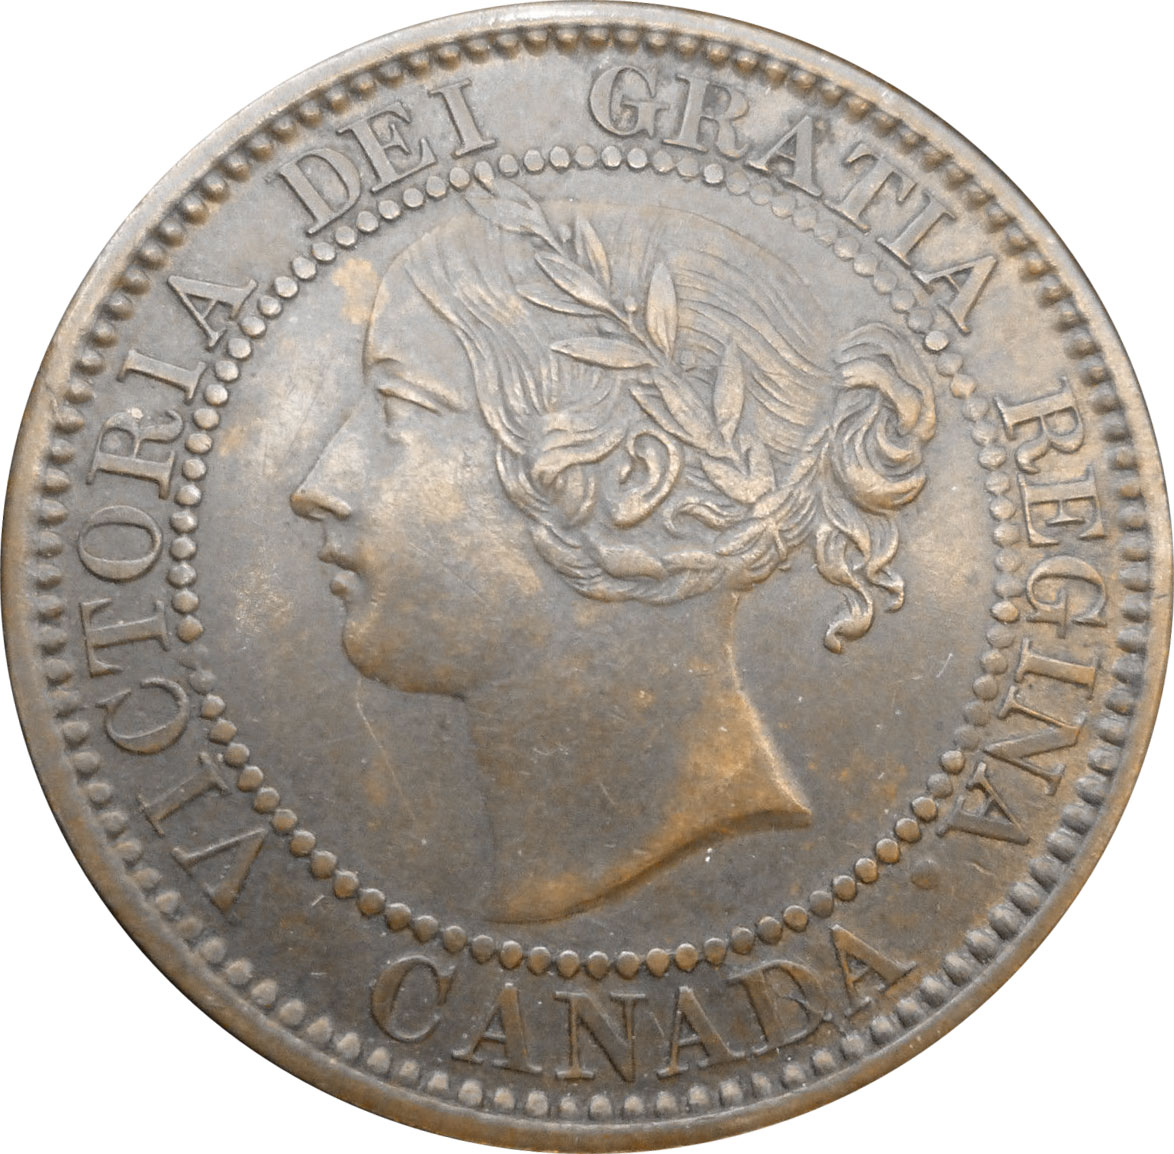 AU-50 - 1 cent 1858 and 1859 - Victoria